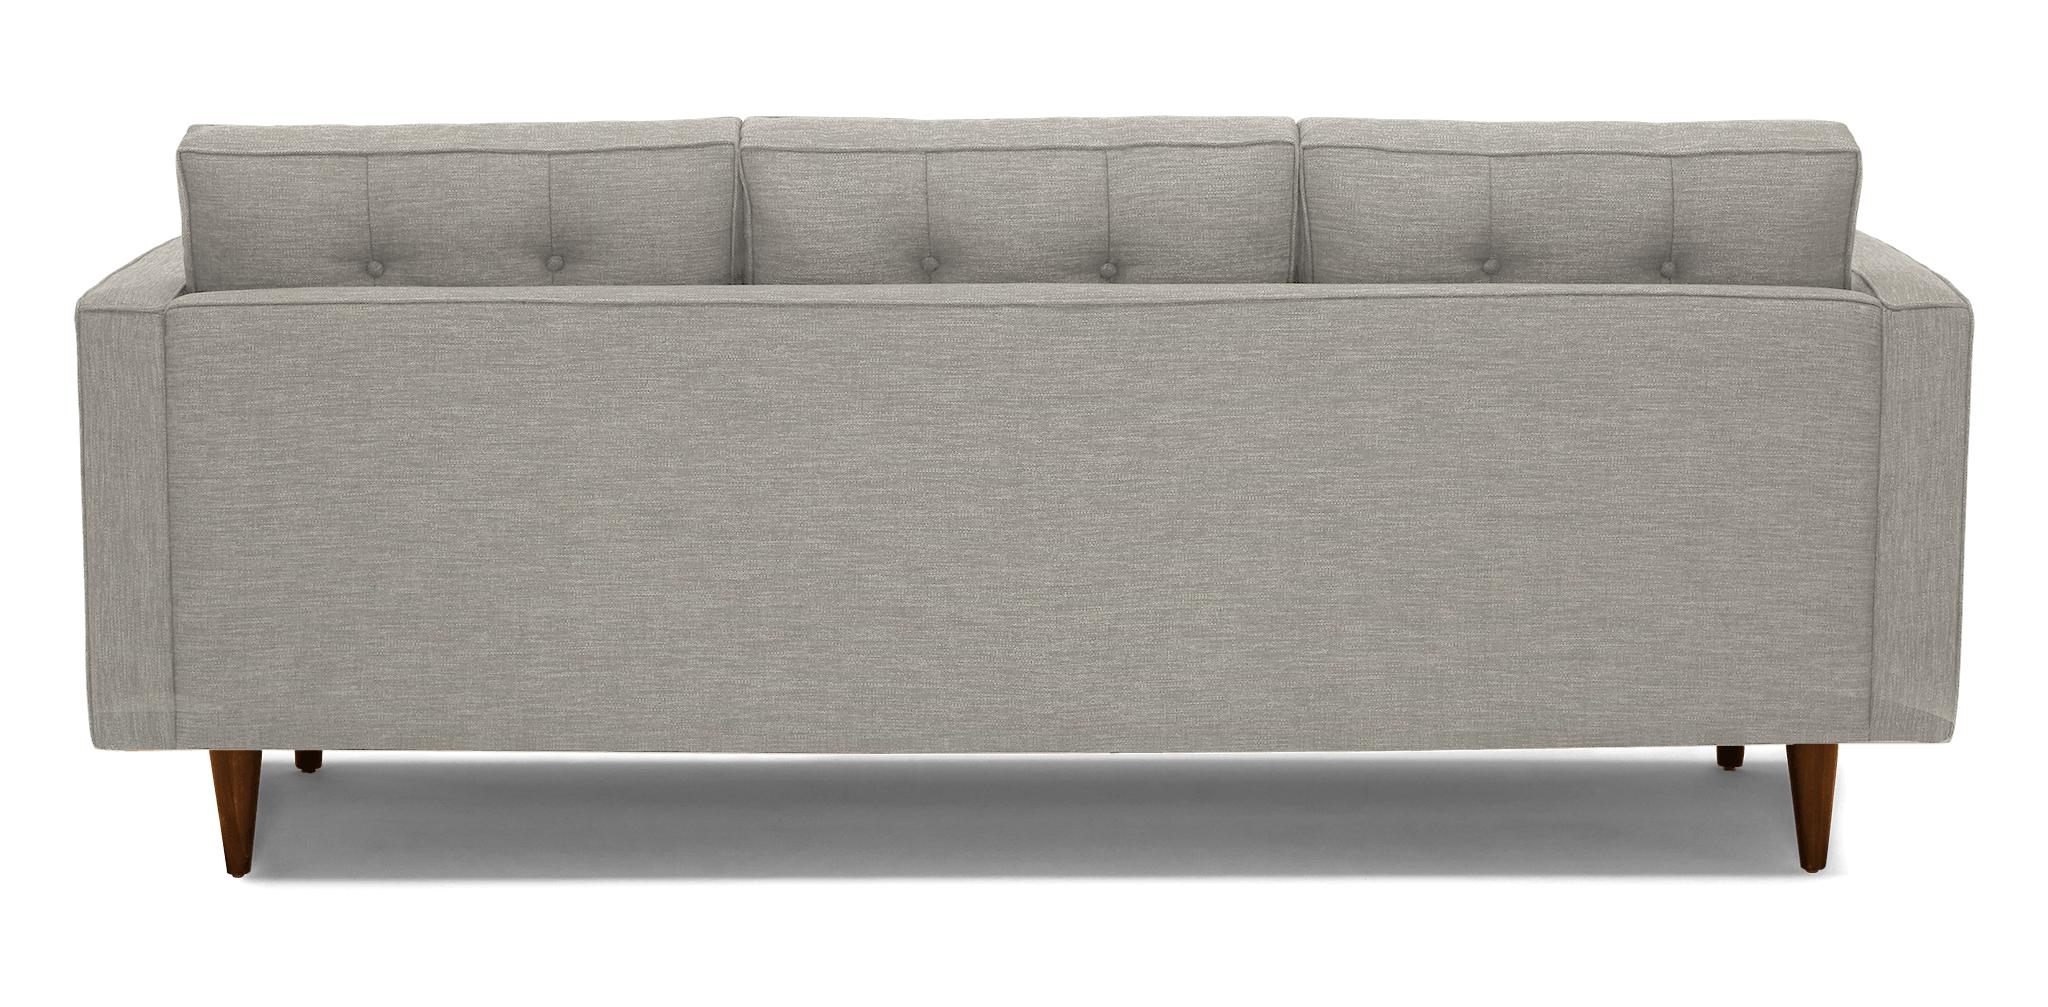 White Braxton Mid Century Modern Sofa - Bloke Cotton - Mocha - Image 4